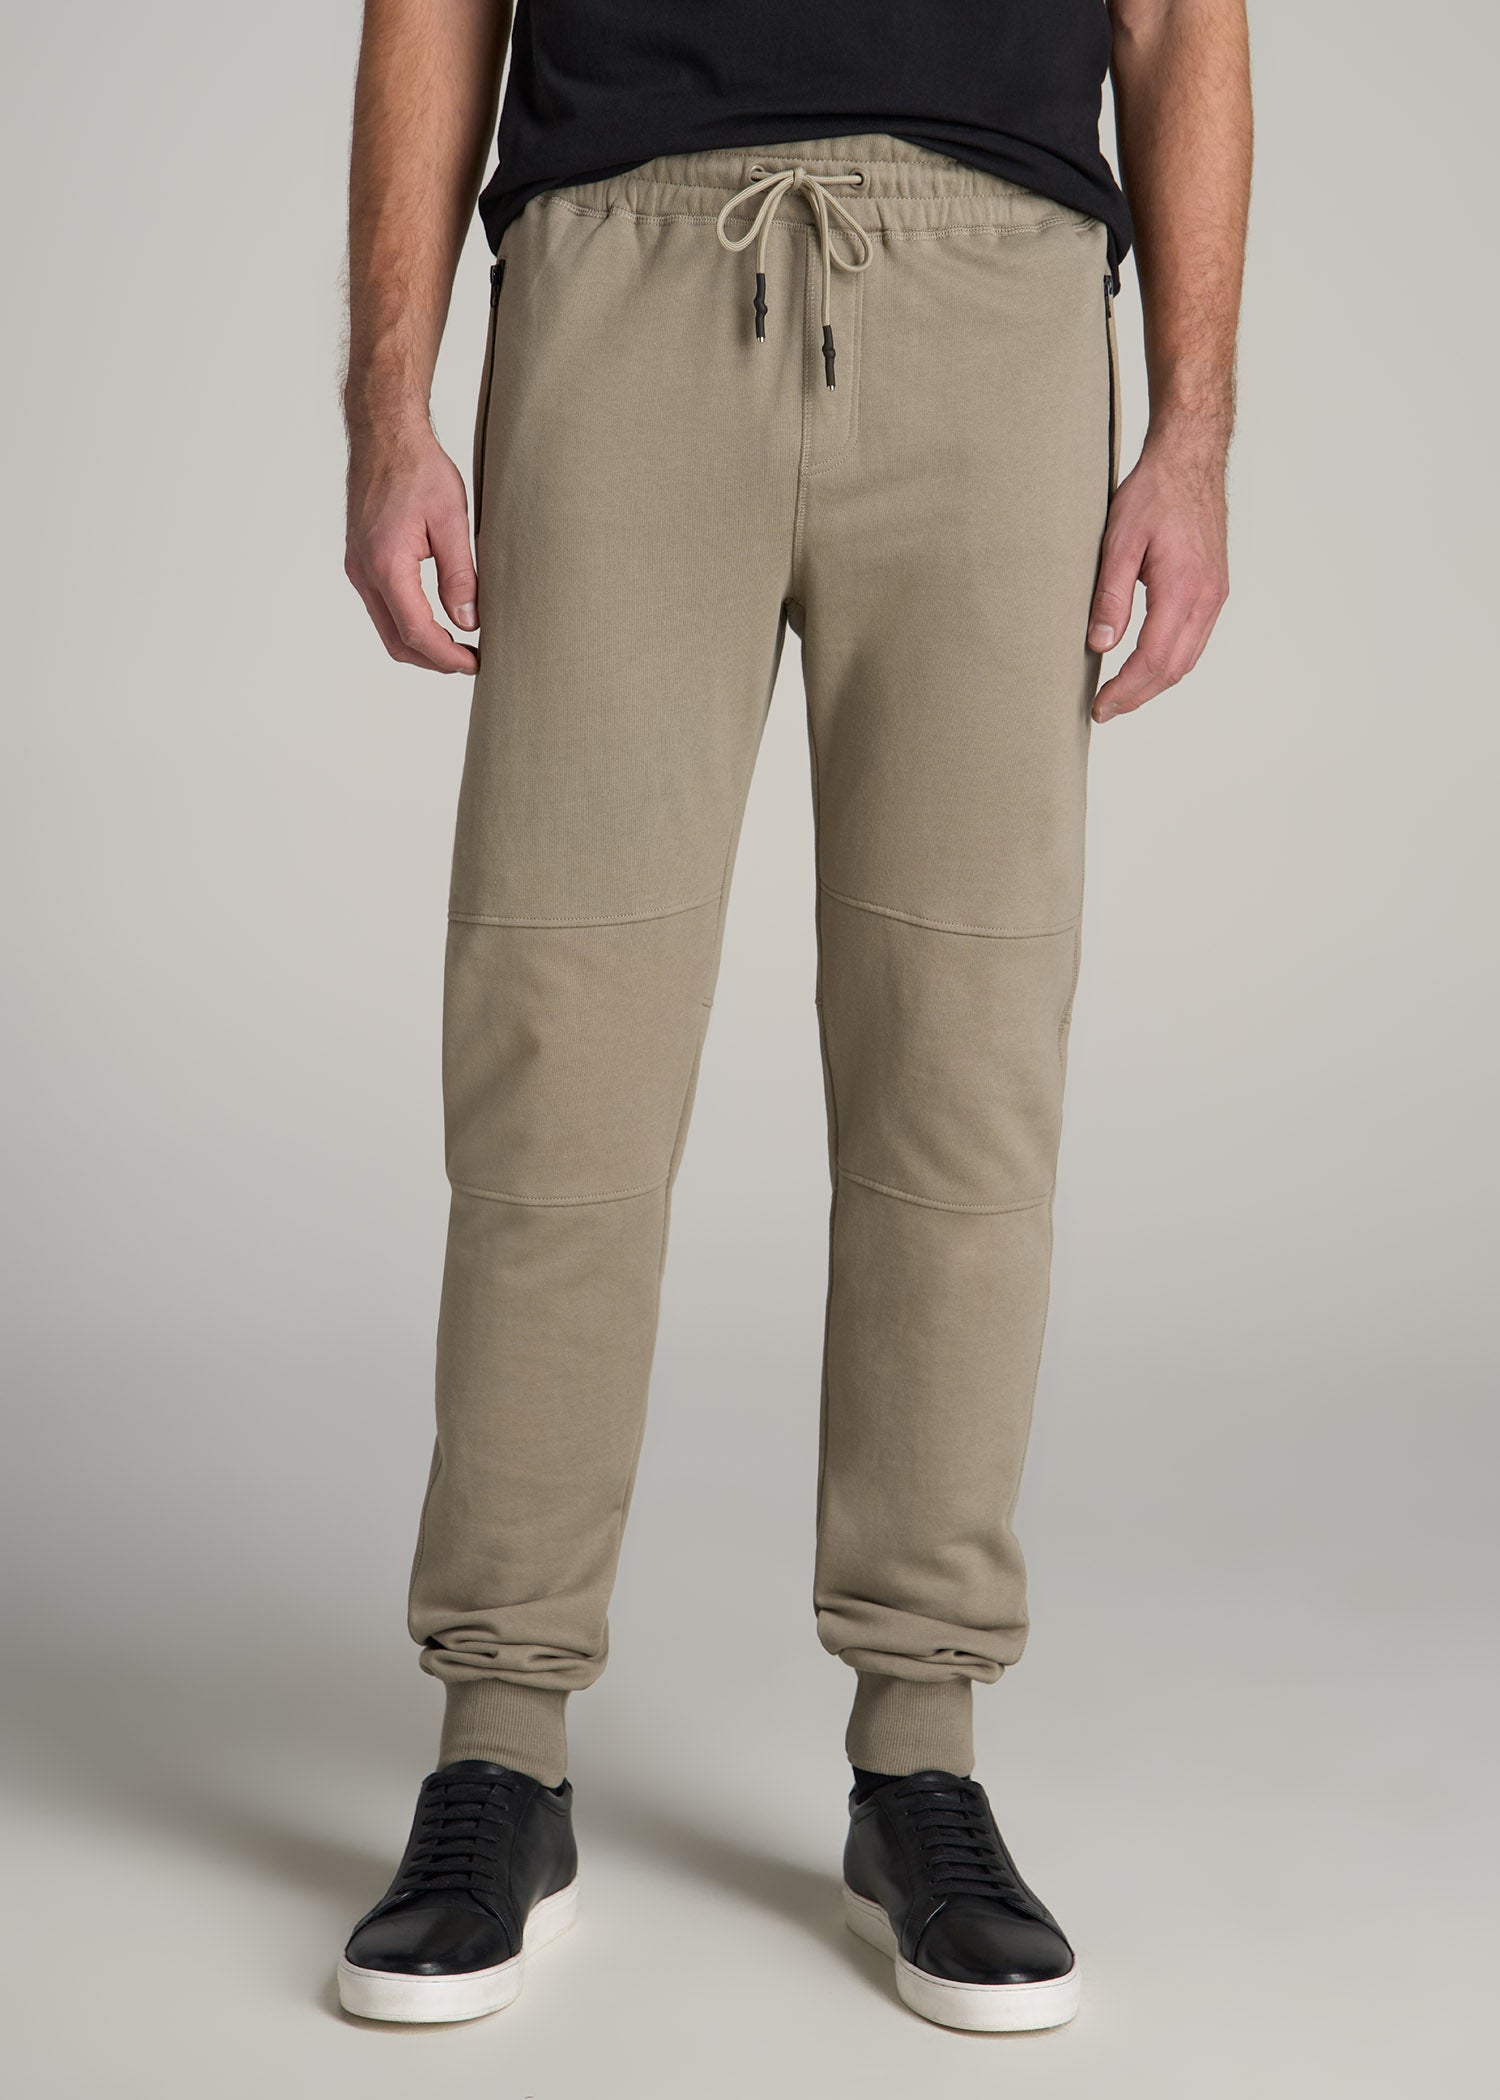 Men's Chino Jogger Pants Men's Cargo Pants Slim Fit Casual Jogger Pant  Sweatpants Quick Dry Athletic Sweatpants